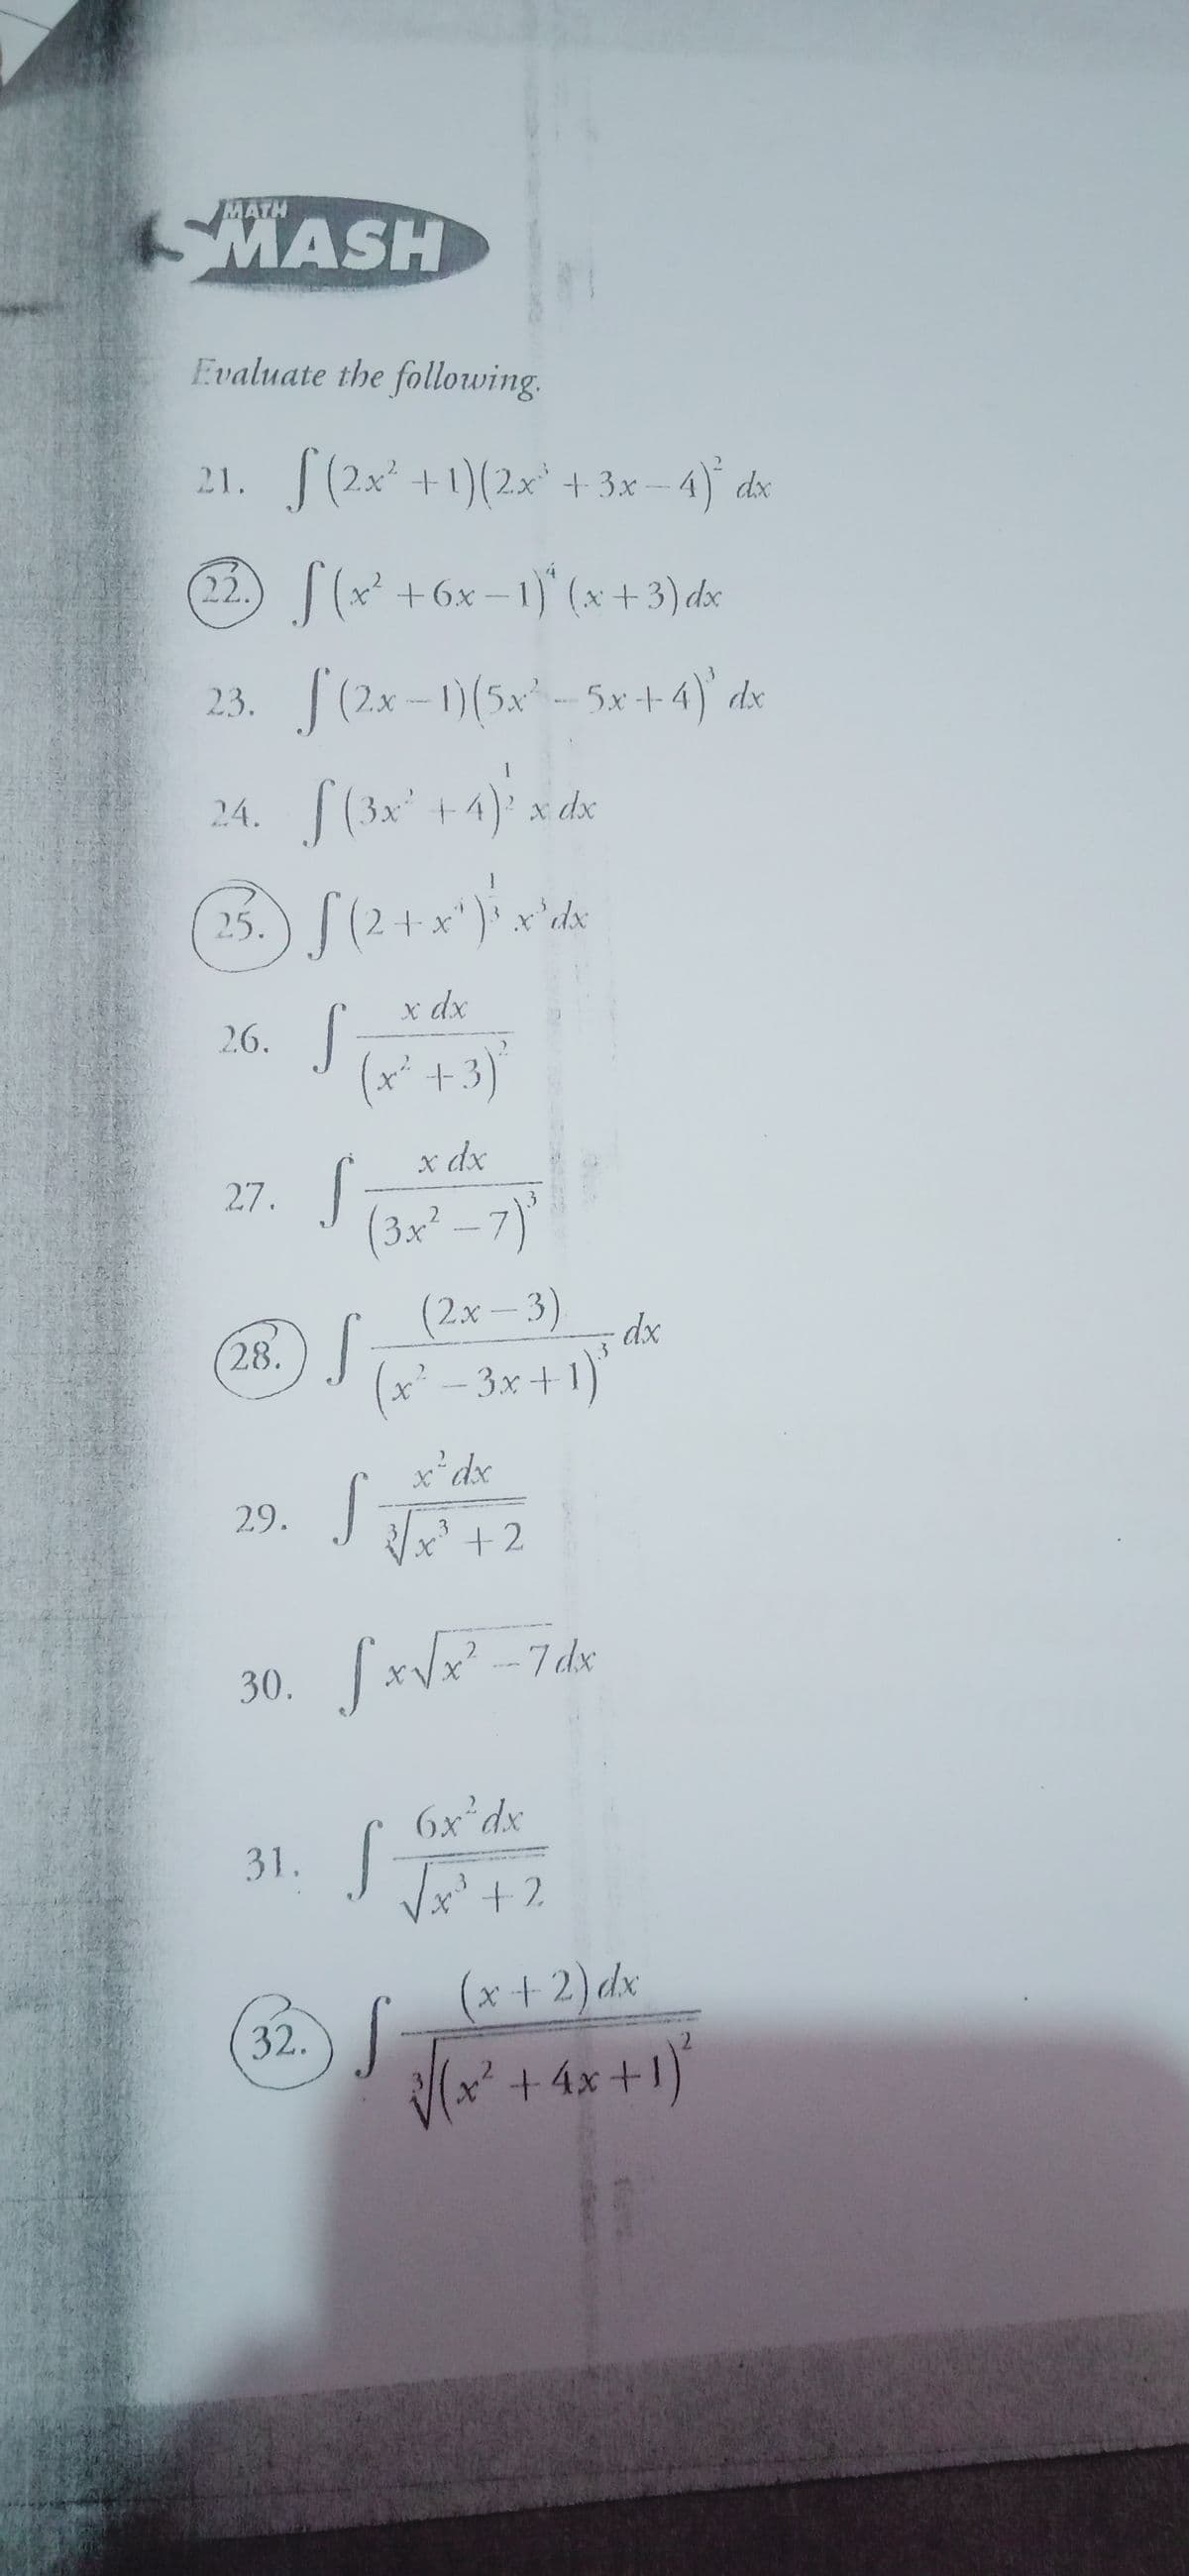 MATH
MASH
Evaluate the following.
21. (2x +1)(2x* + 3x - 4) dx
22.)(x +6x - ) (x +3) dx
2,3. (2x-1)(5x- Sx+4)' dx
24.(3x +4) x de
25.) S(2 +x")* x'dkx
26. S
X dx
(x* +3)
x dx
27. |
(3x² - 7)
(2x-3)
28.)/
dx
3
(x' - 3x+1)
x'dx
29. |
x* + 2
3
30. xVx -7dx
2
6x°dx
31.
Vx'+2
3
(x + 2) dx
32.)
(x²+4x+1)
2.
